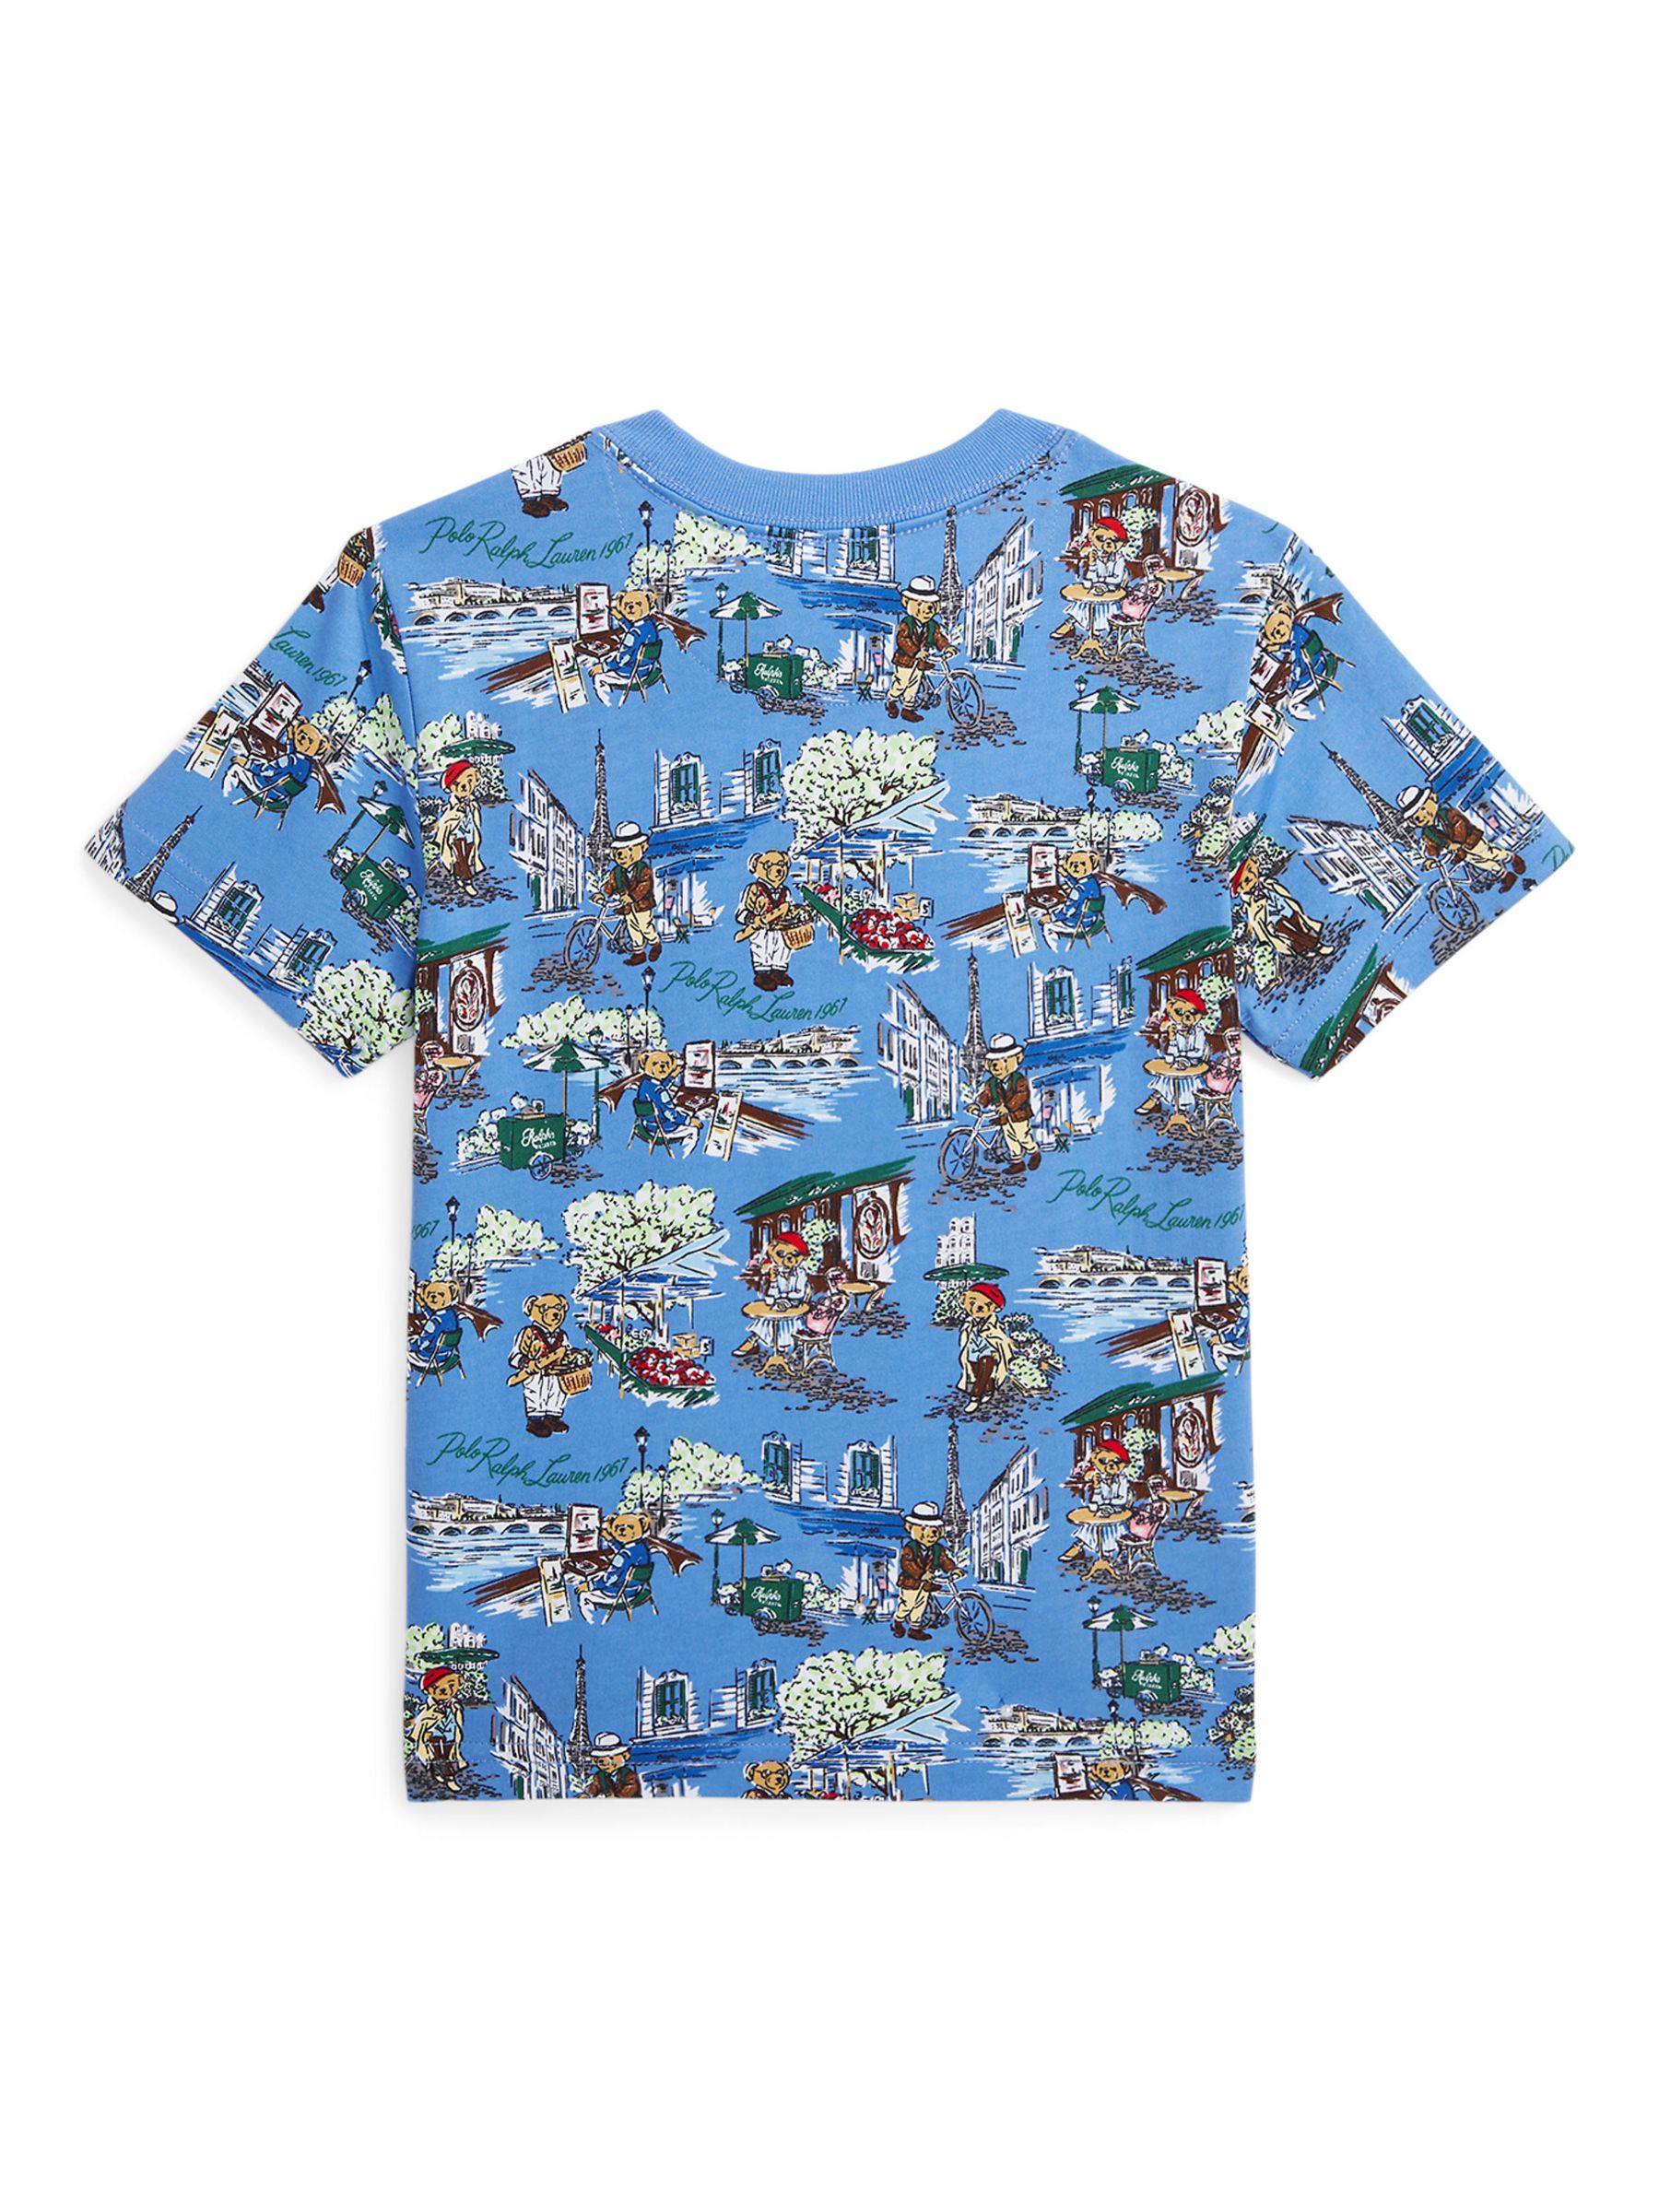 Ralph Lauren Kids' Paris Bear Print T-Shirt, Blue/Multi, 7 years